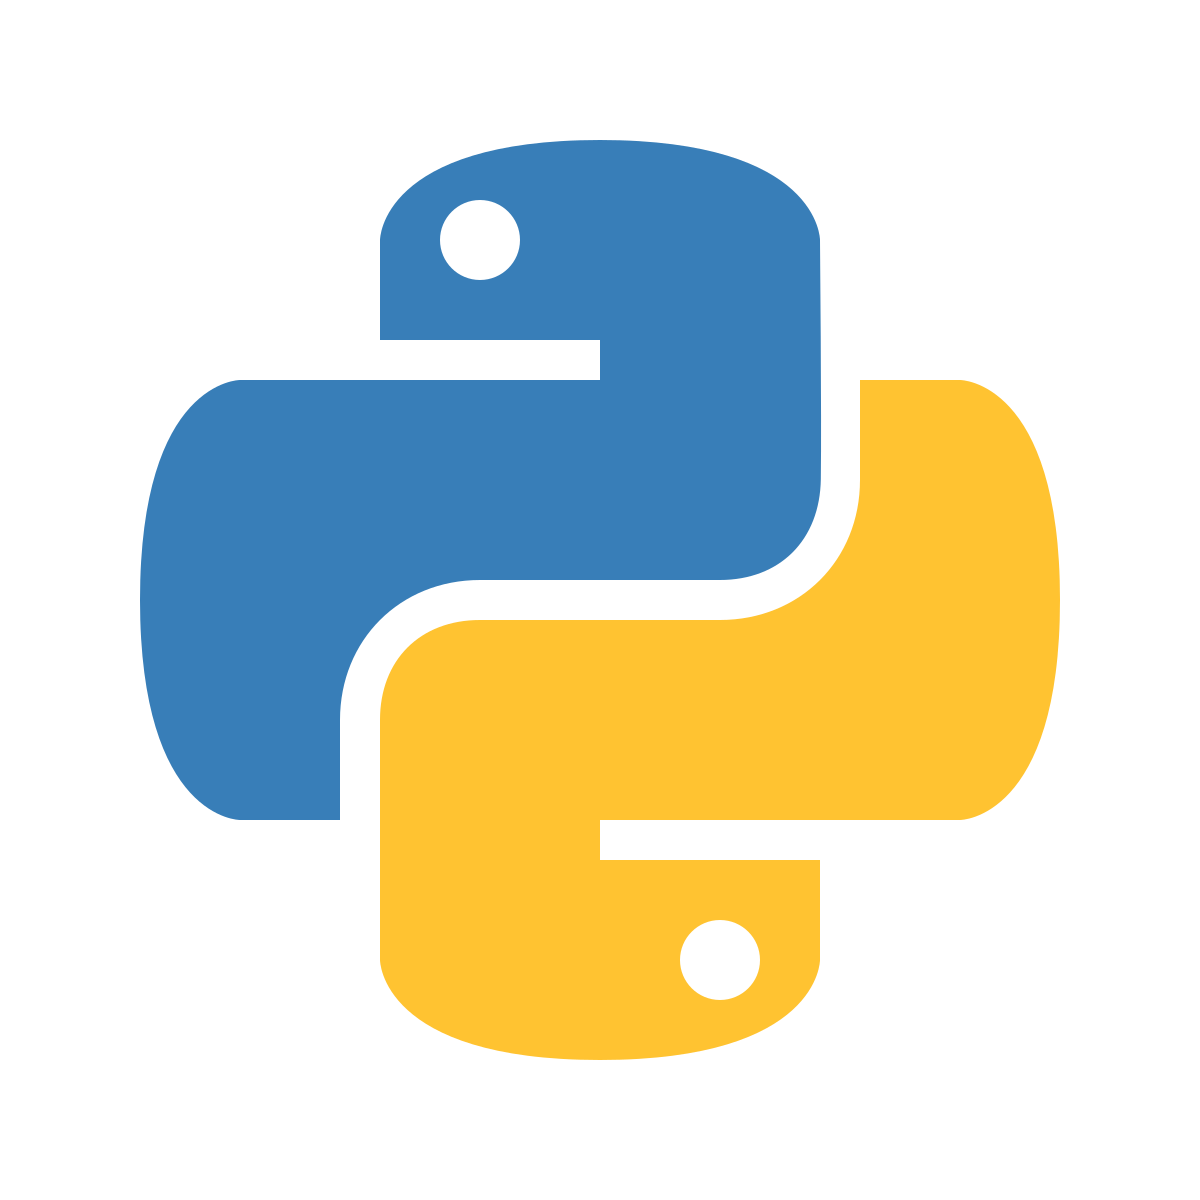 [Python] tqdm - 알고리즘 진행률 확인하기